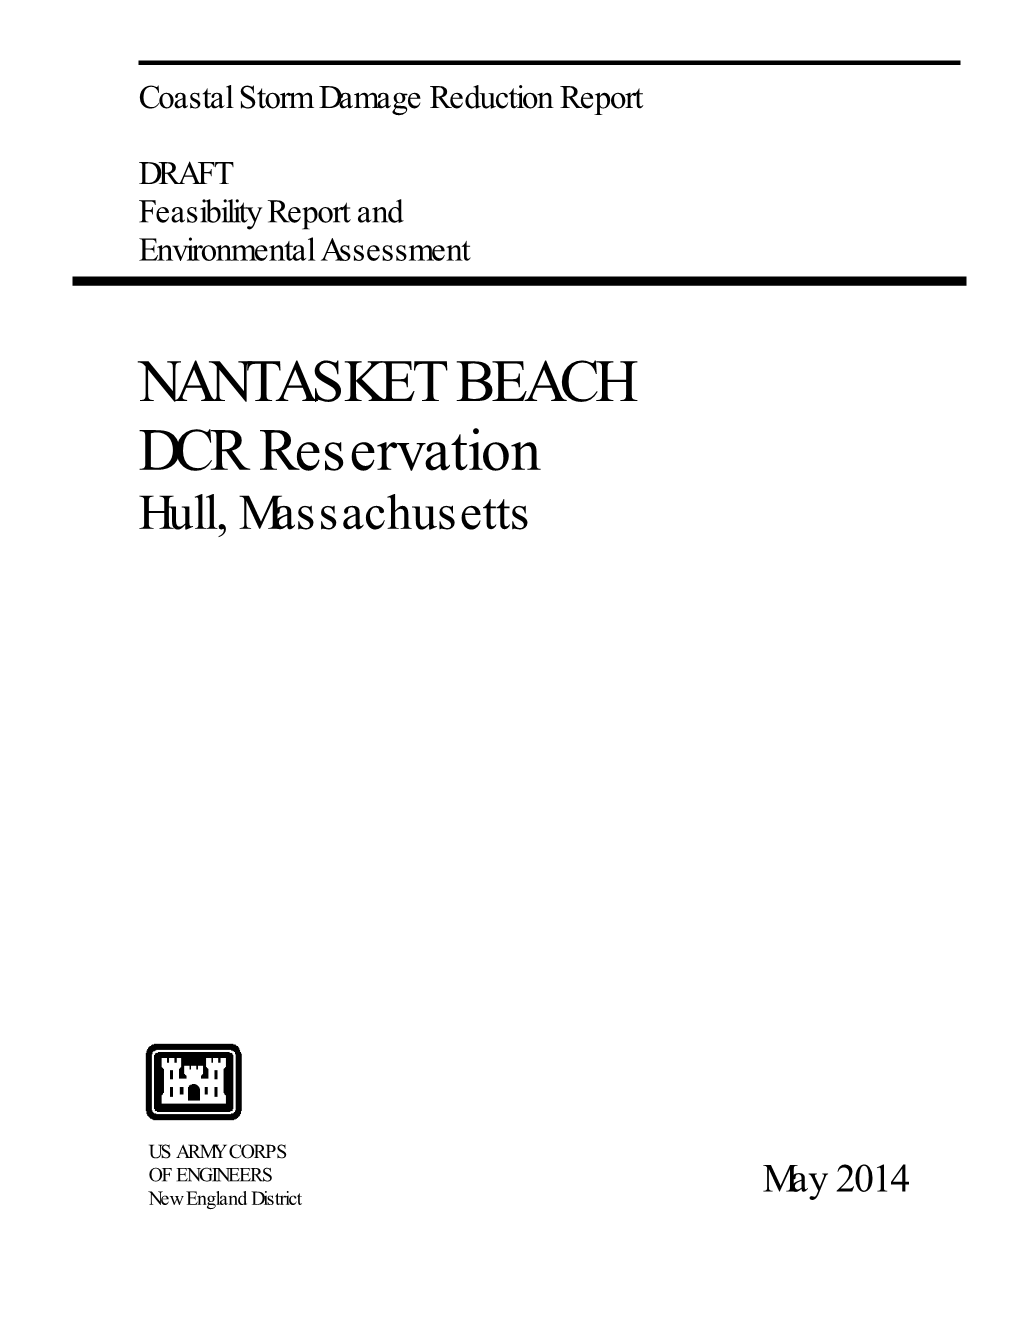 Nantasket Beach Coastal Storm Damage Reduction Project For